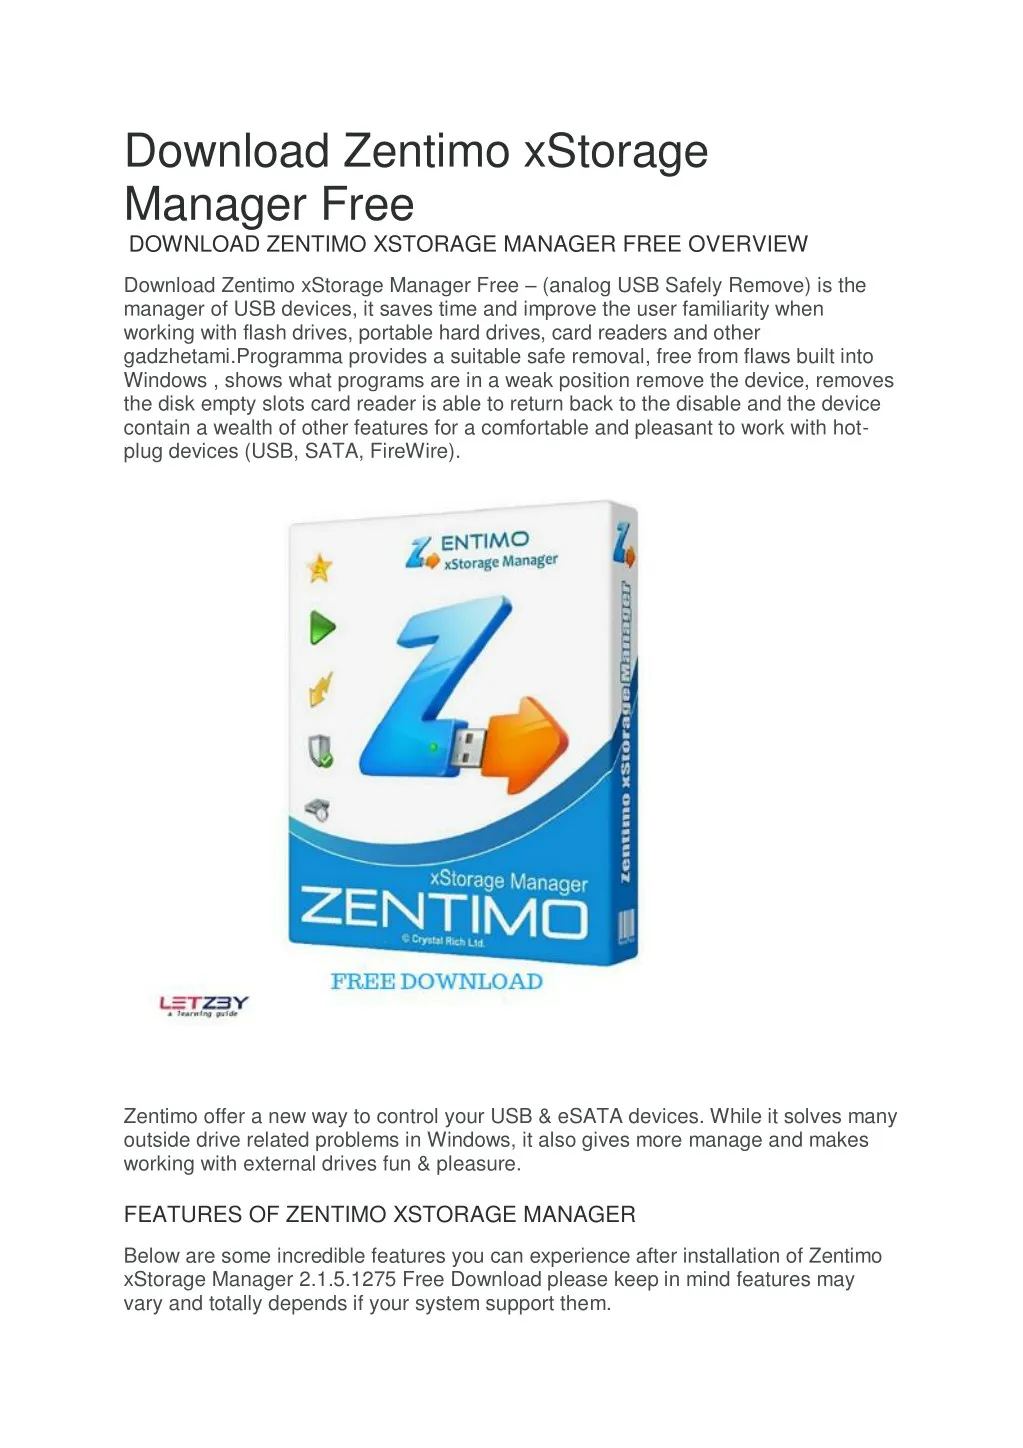 download zentimo xstorage manager free download